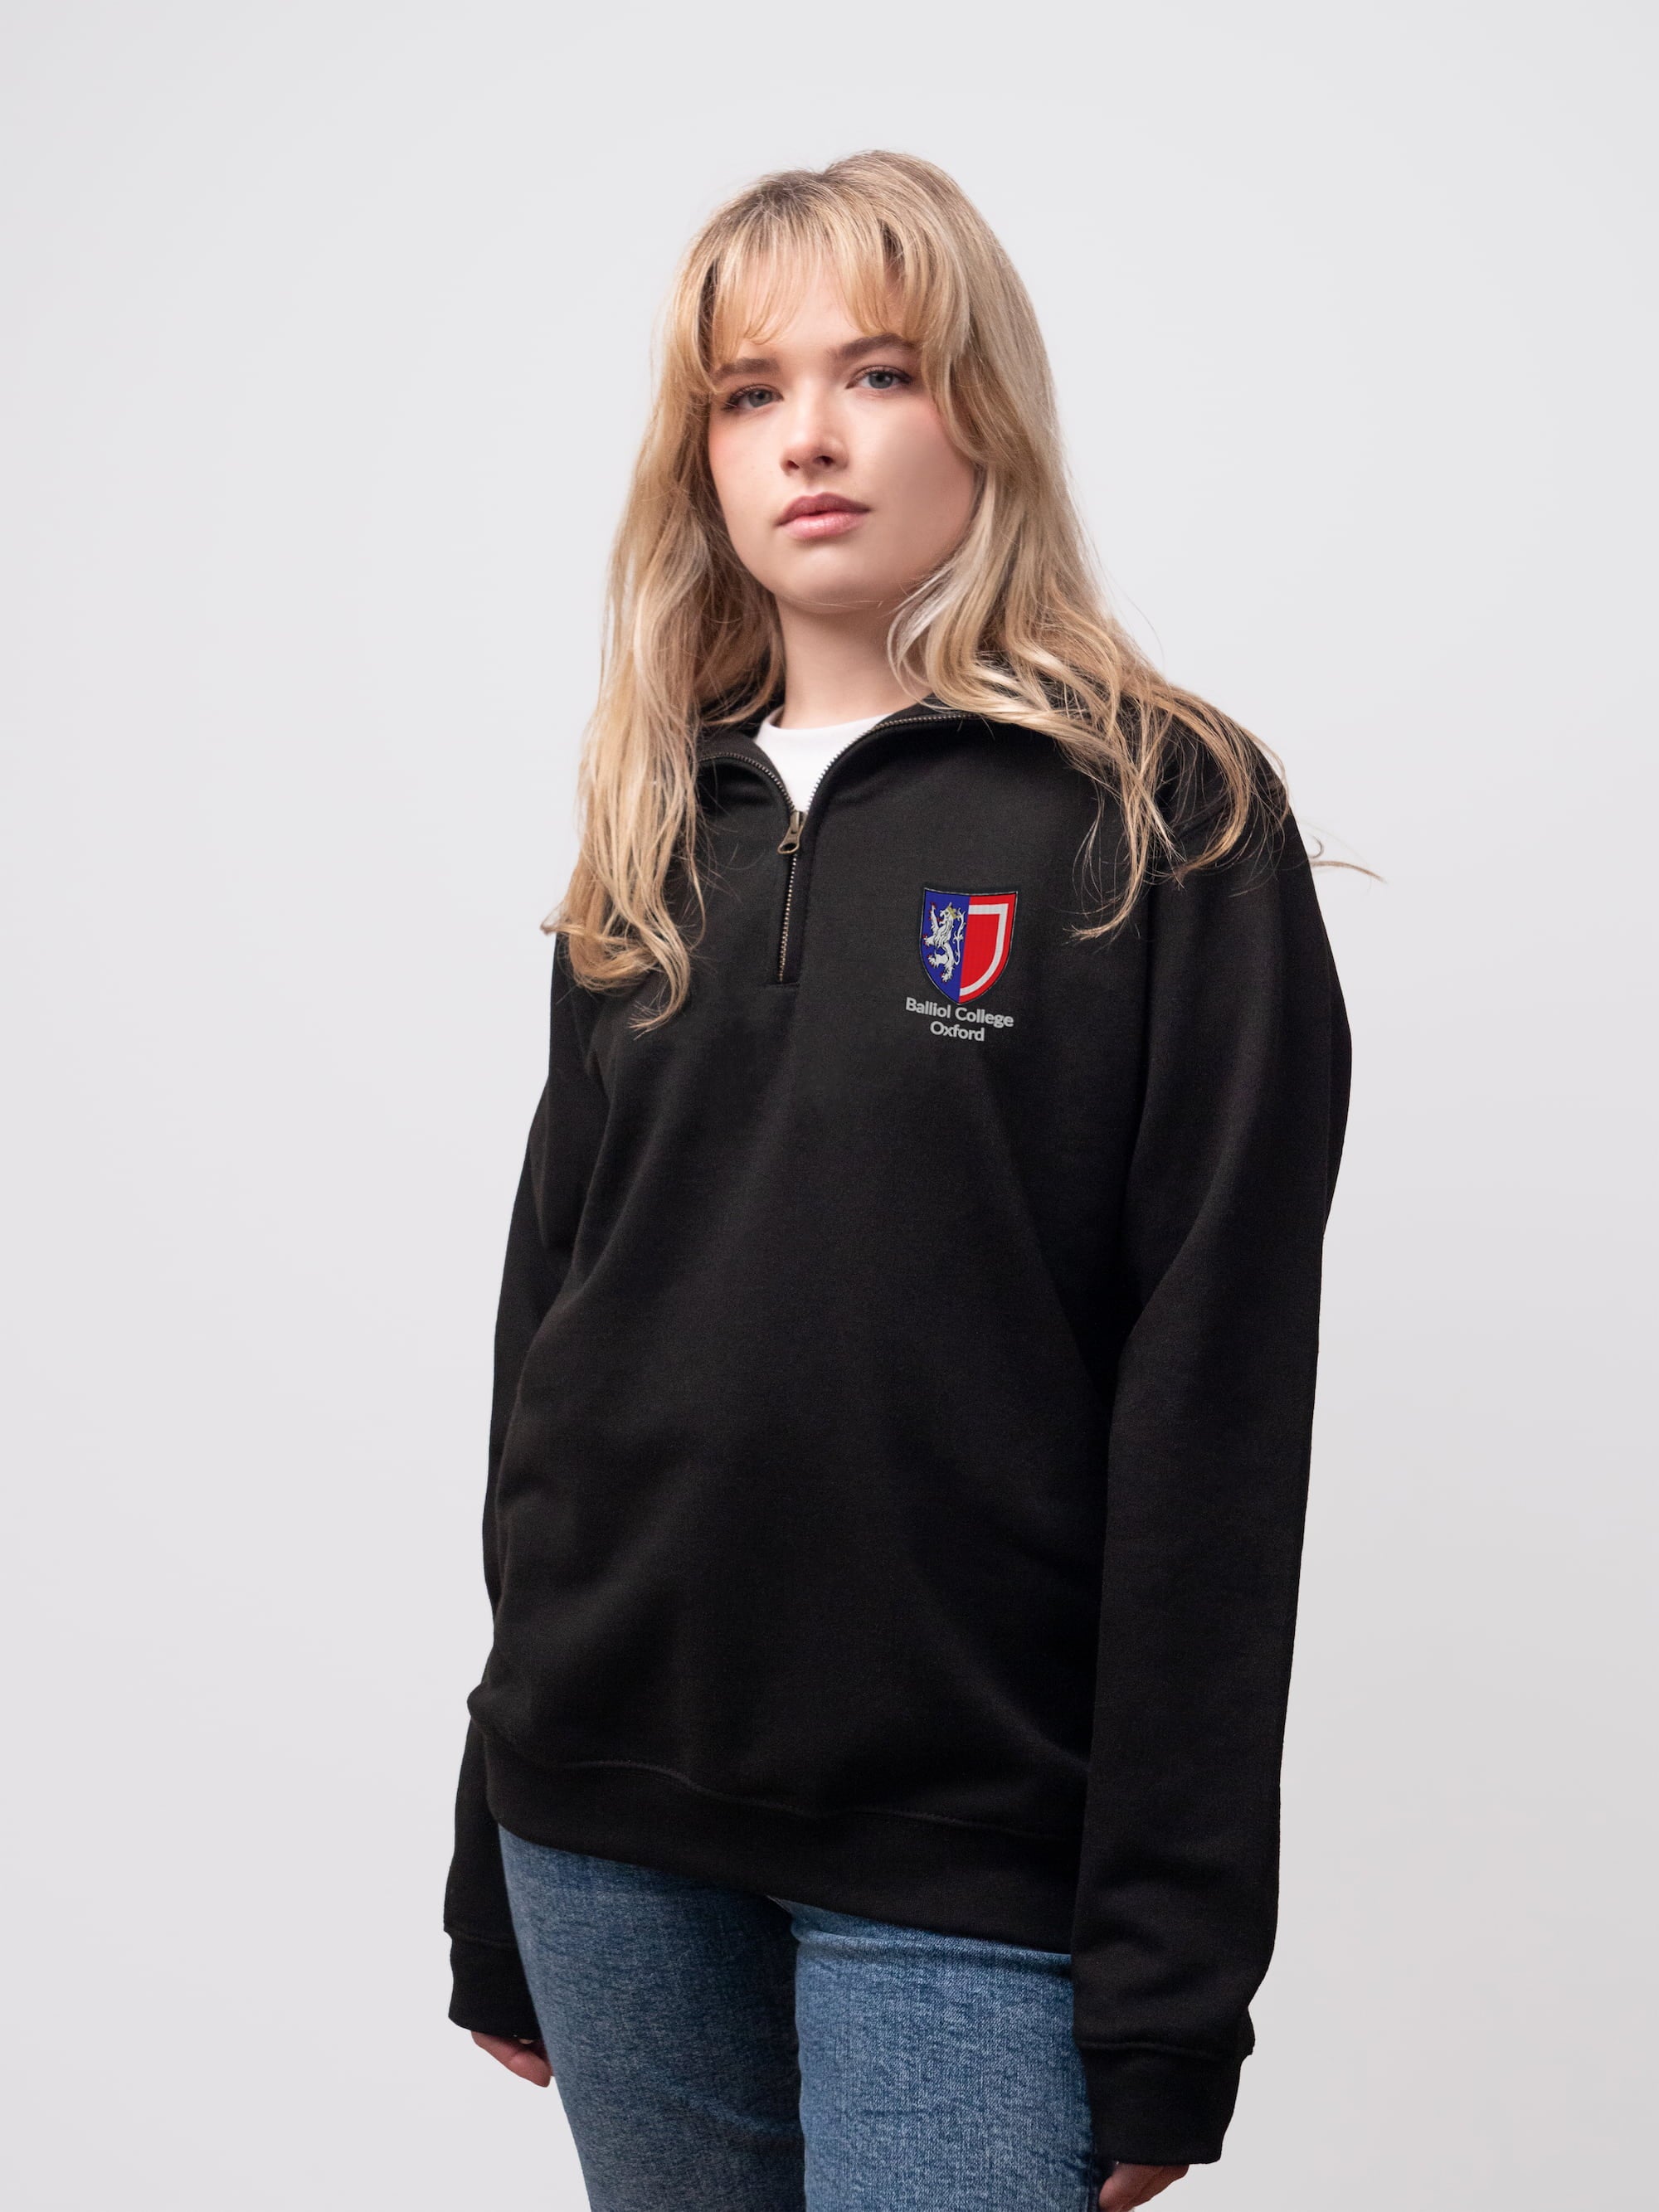 Balliol student wearing a black 1/4 zip sweatshirt 